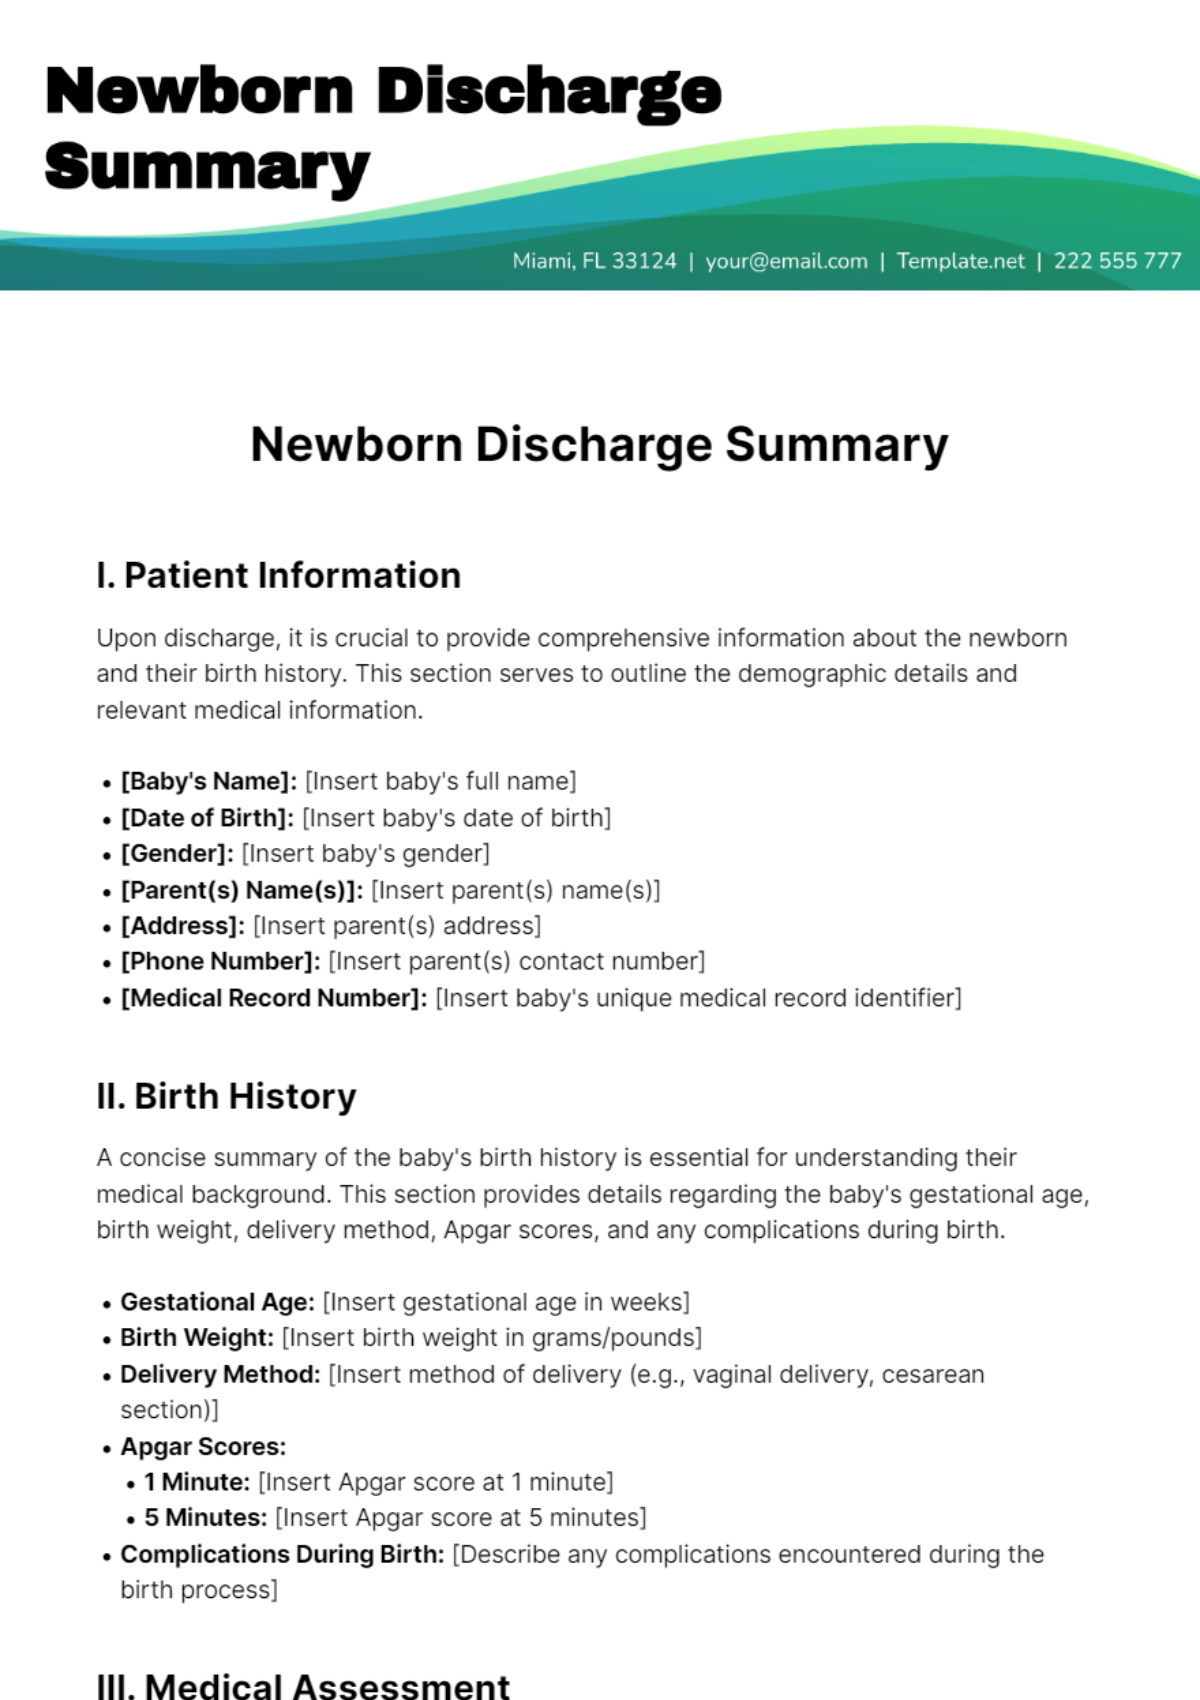 Newborn Discharge Summary Template 